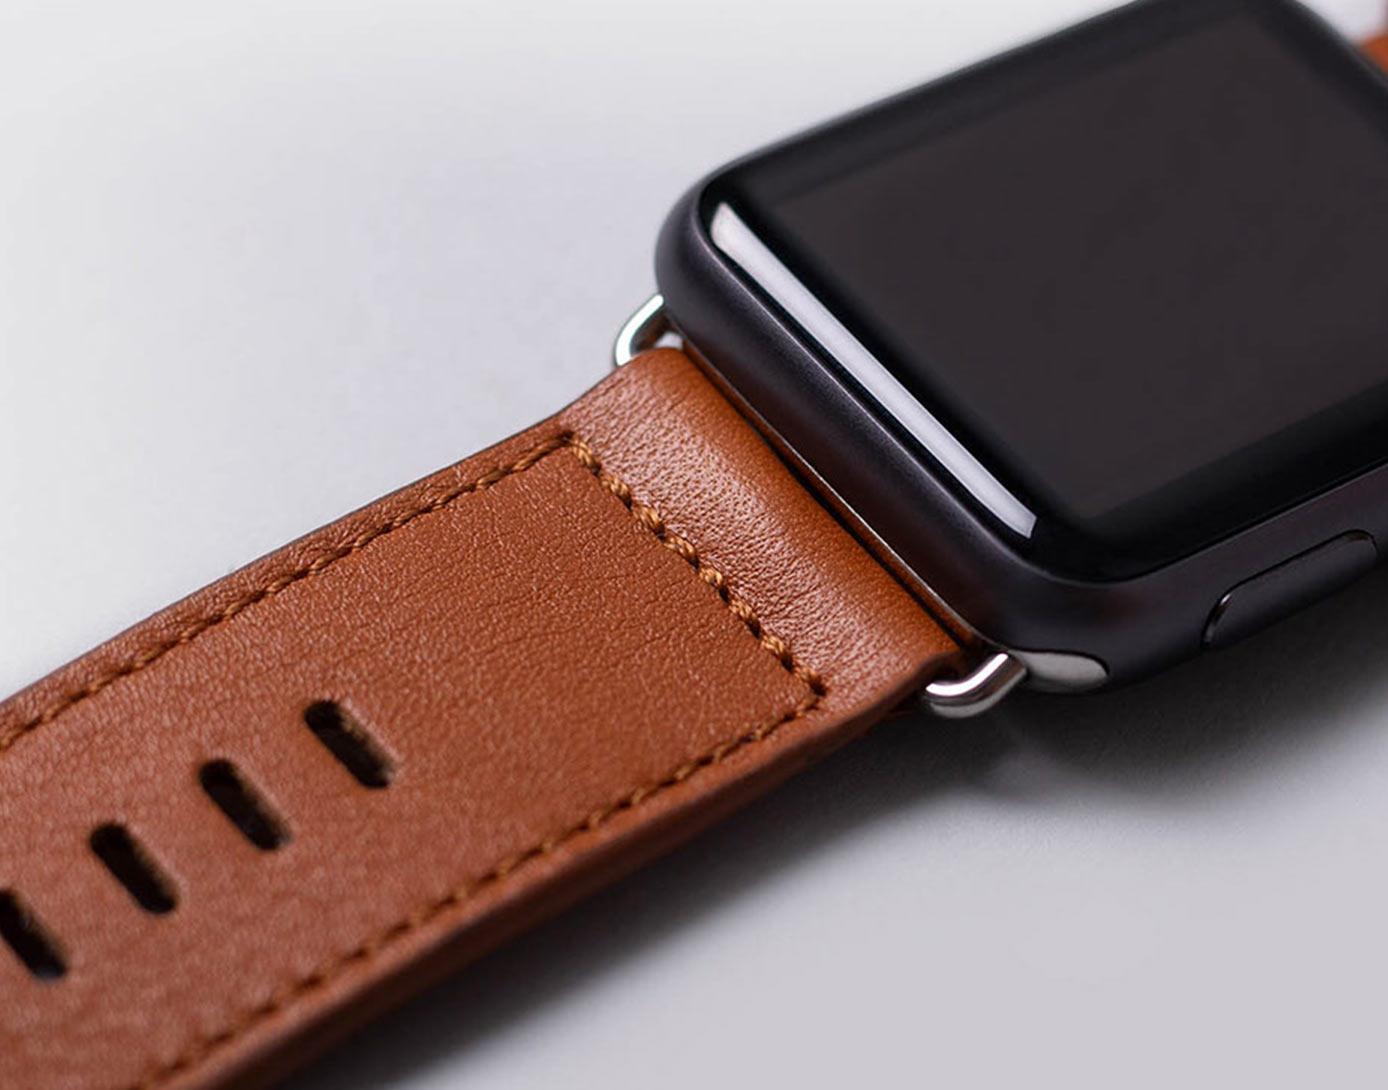 Cinturino in pelle artigianale per Apple Watch